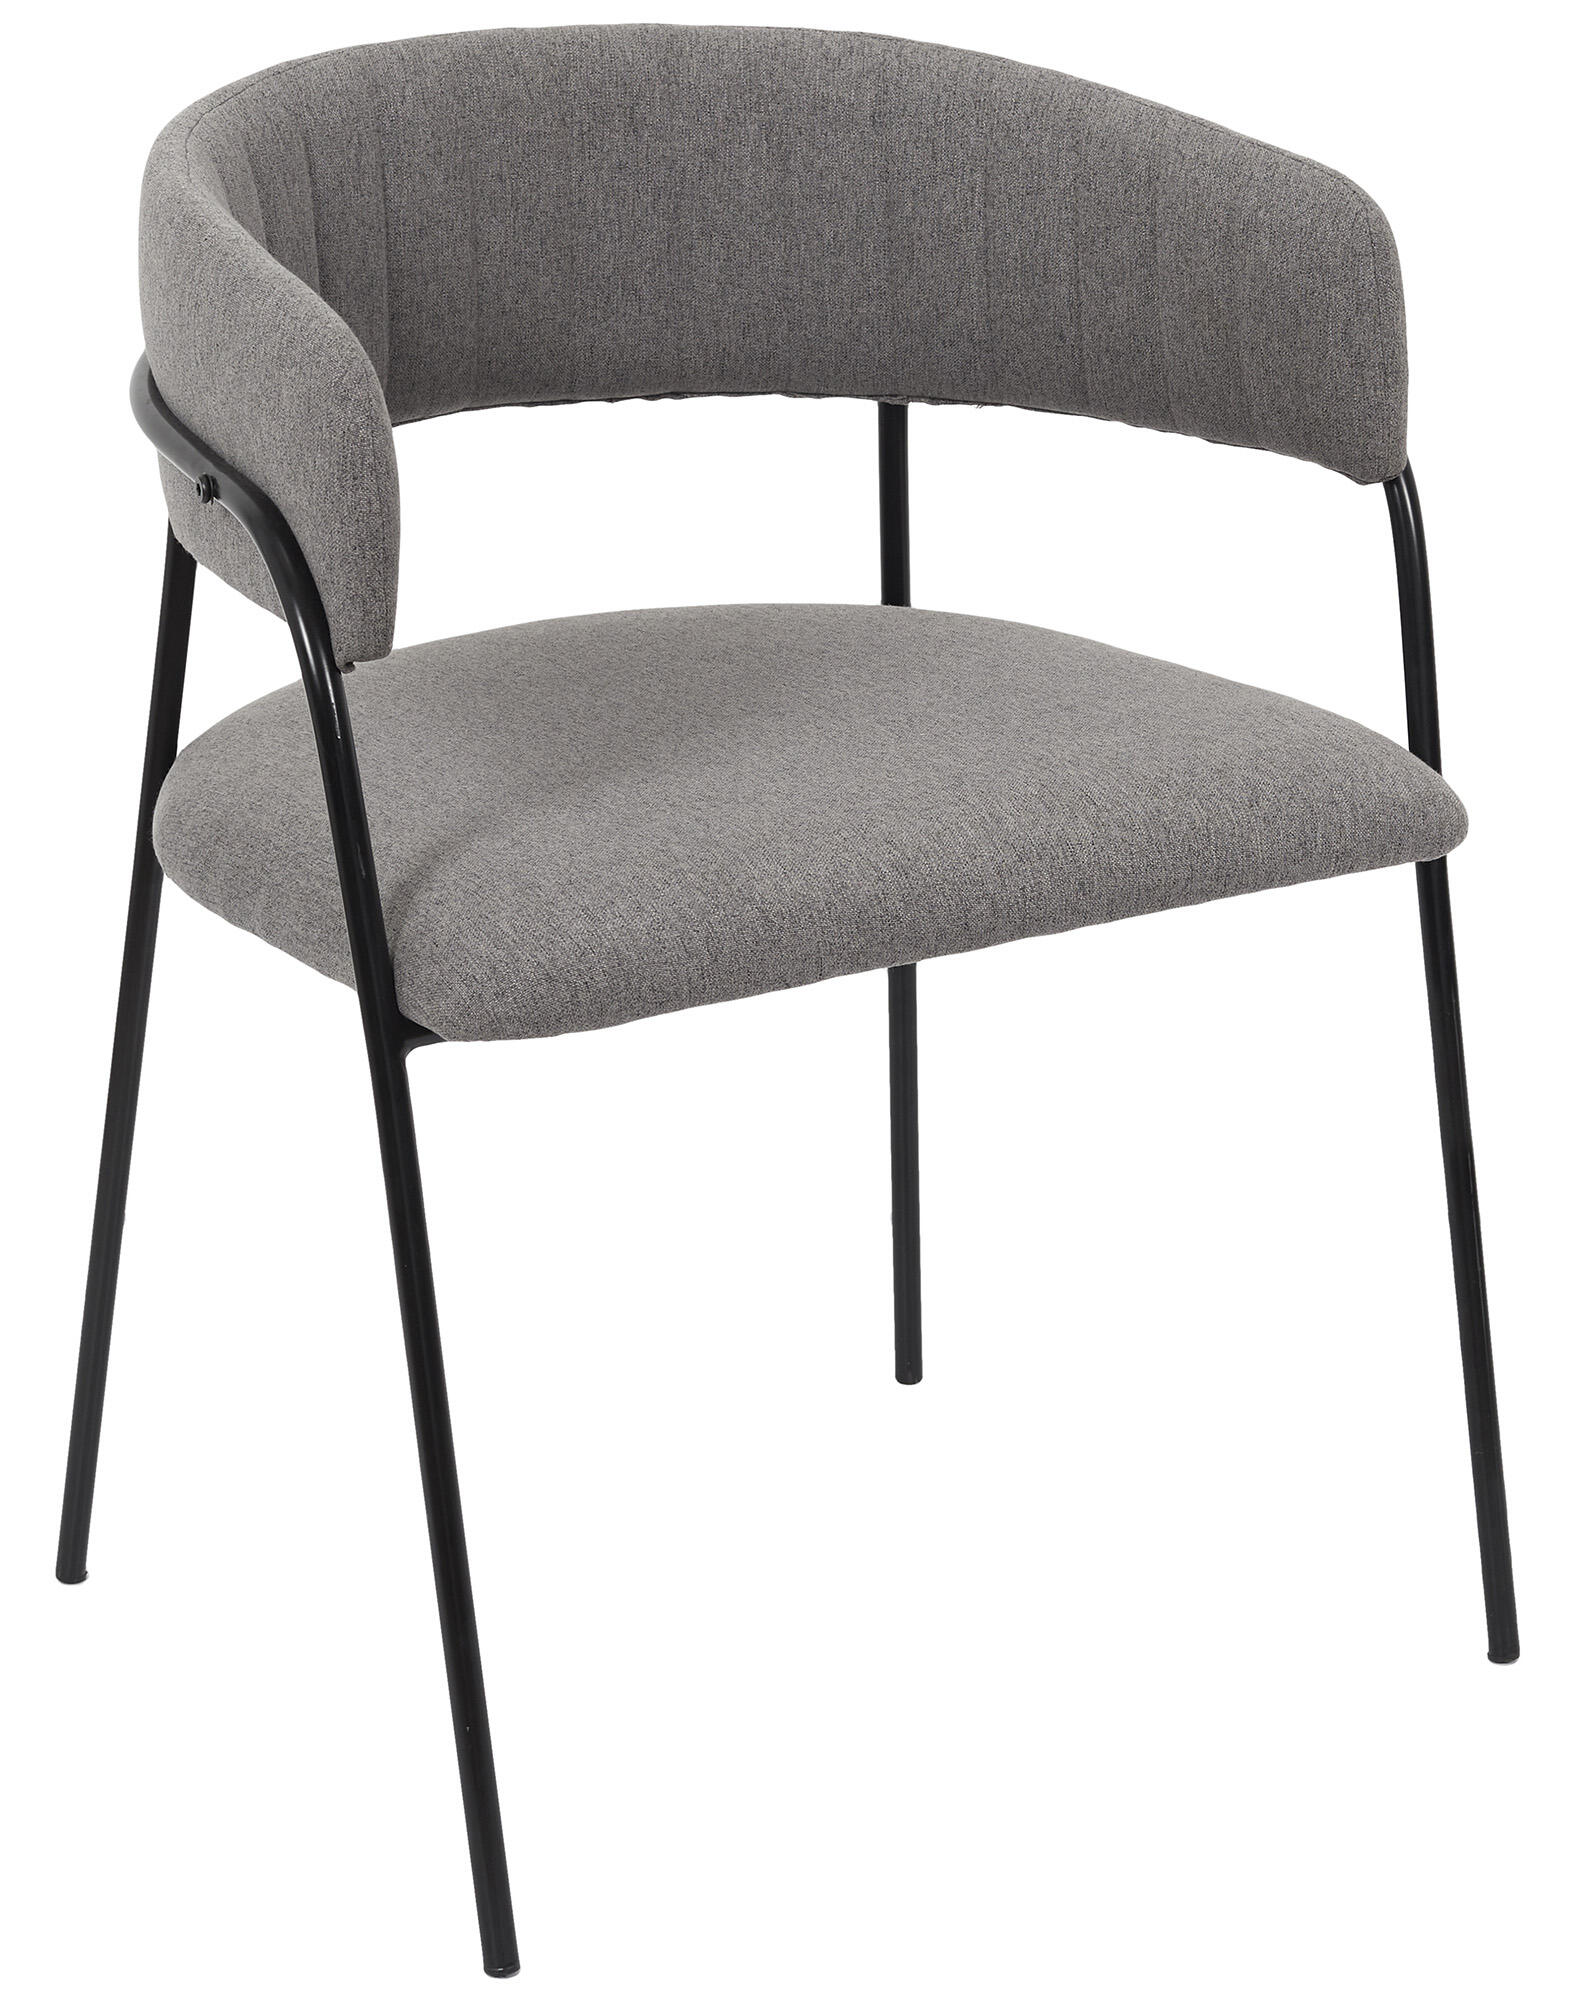 Set de 2 sillas de comedor liverpool color gris de 82x59x57cm